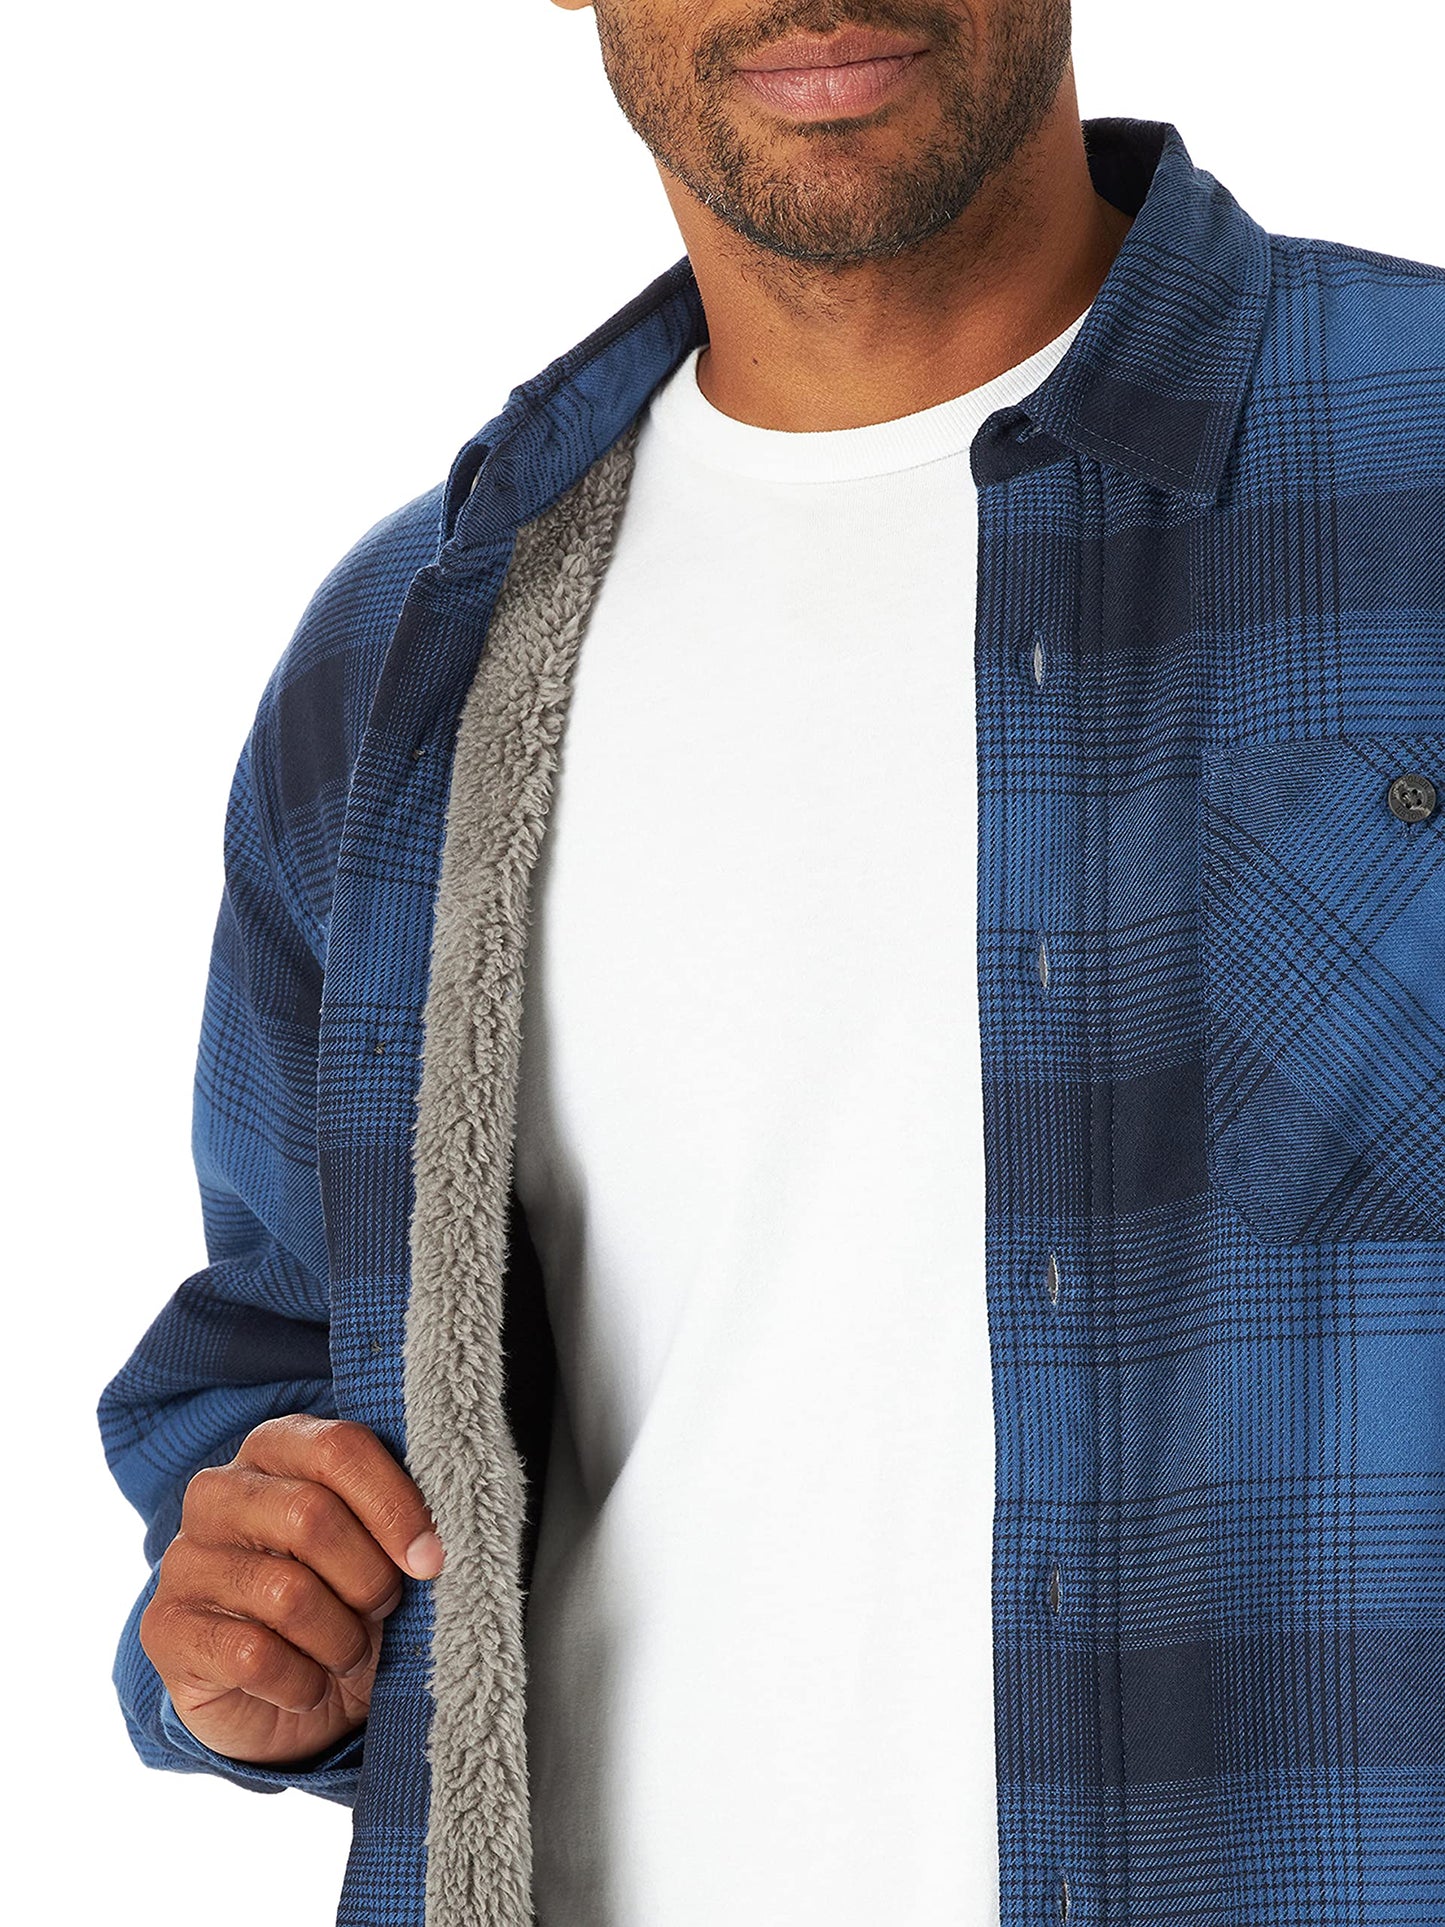 Wrangler Authentics Men's Long Sleeve Sherpa Lined Shirt Jacket, Admiral Blue, Large